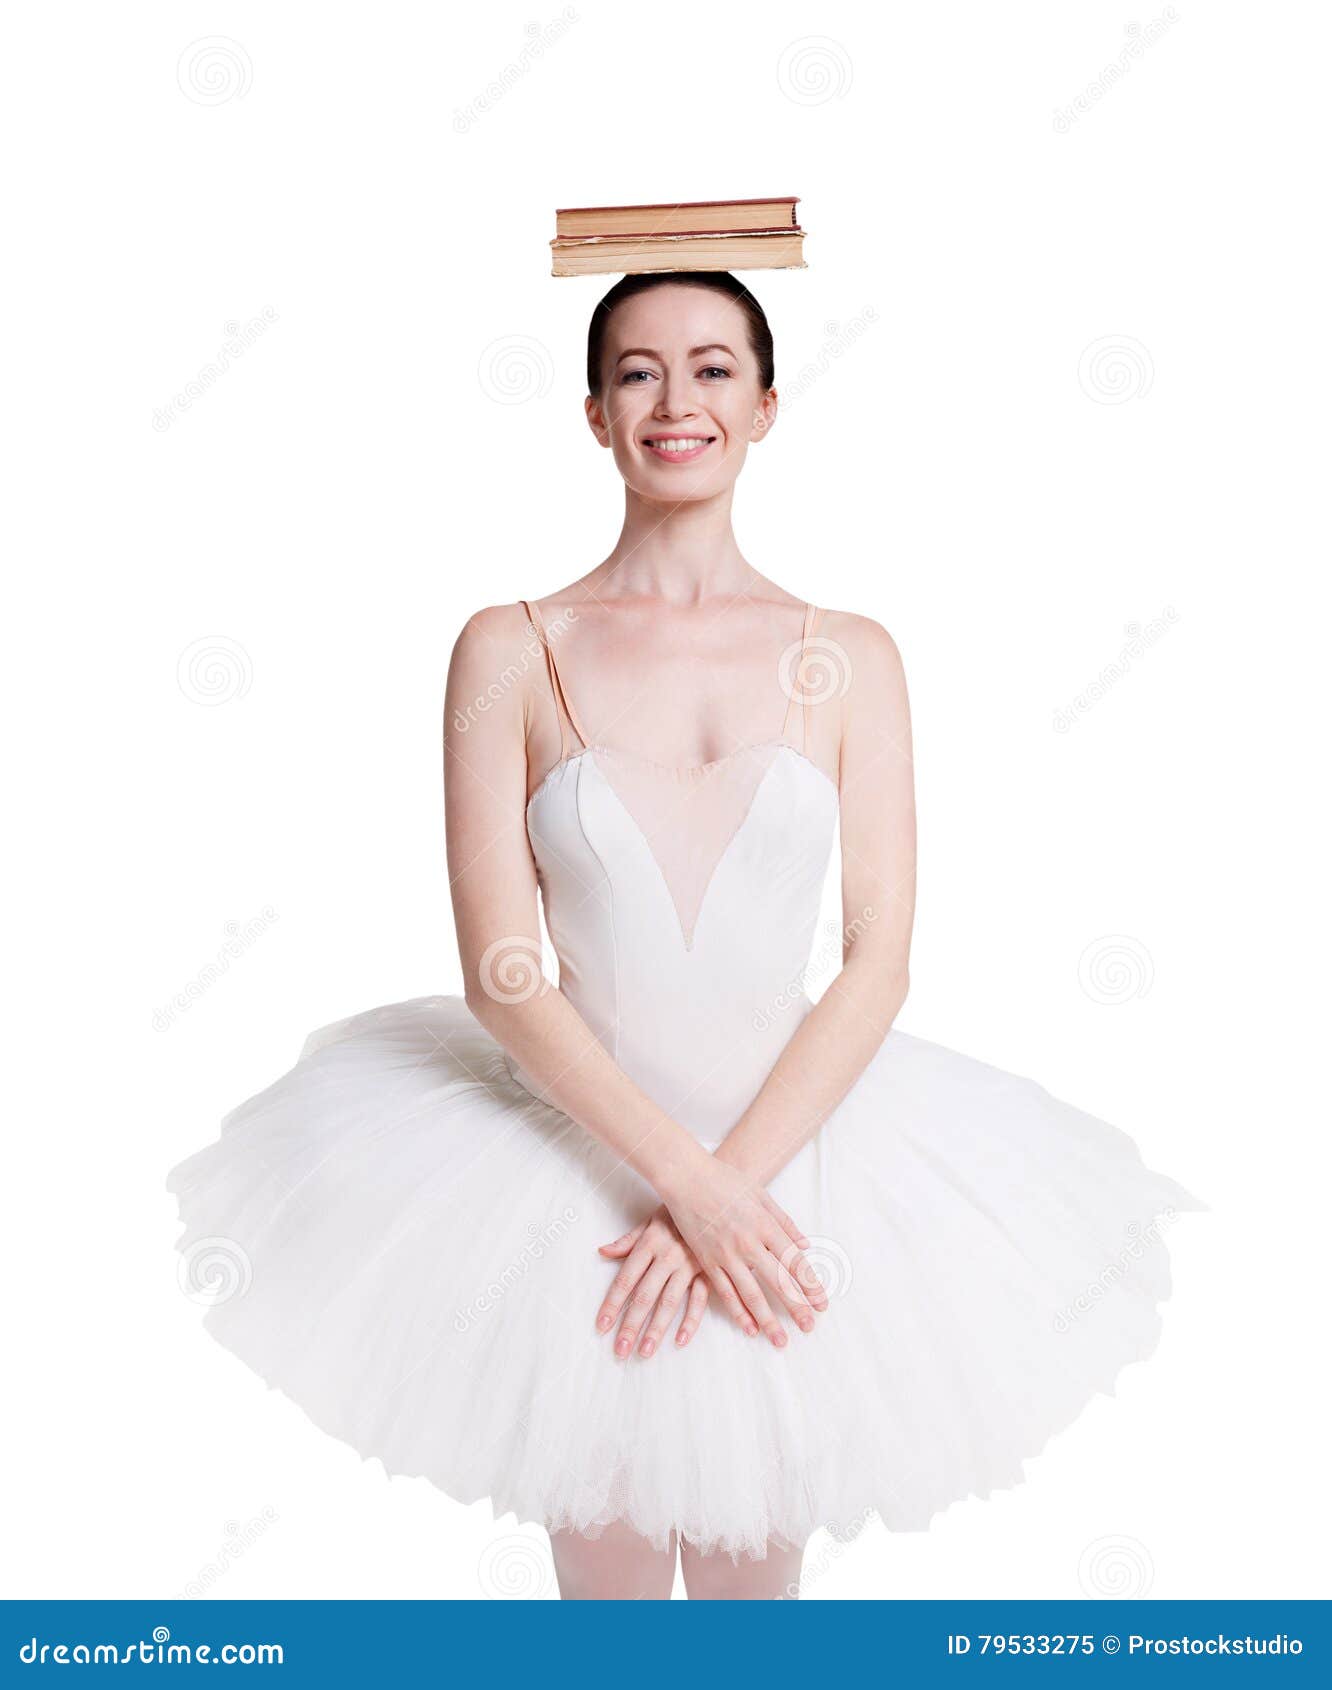 Ballerina Training Ballet Posture Isolated on Background Stock Image - Image of isolated, perform: 79533275